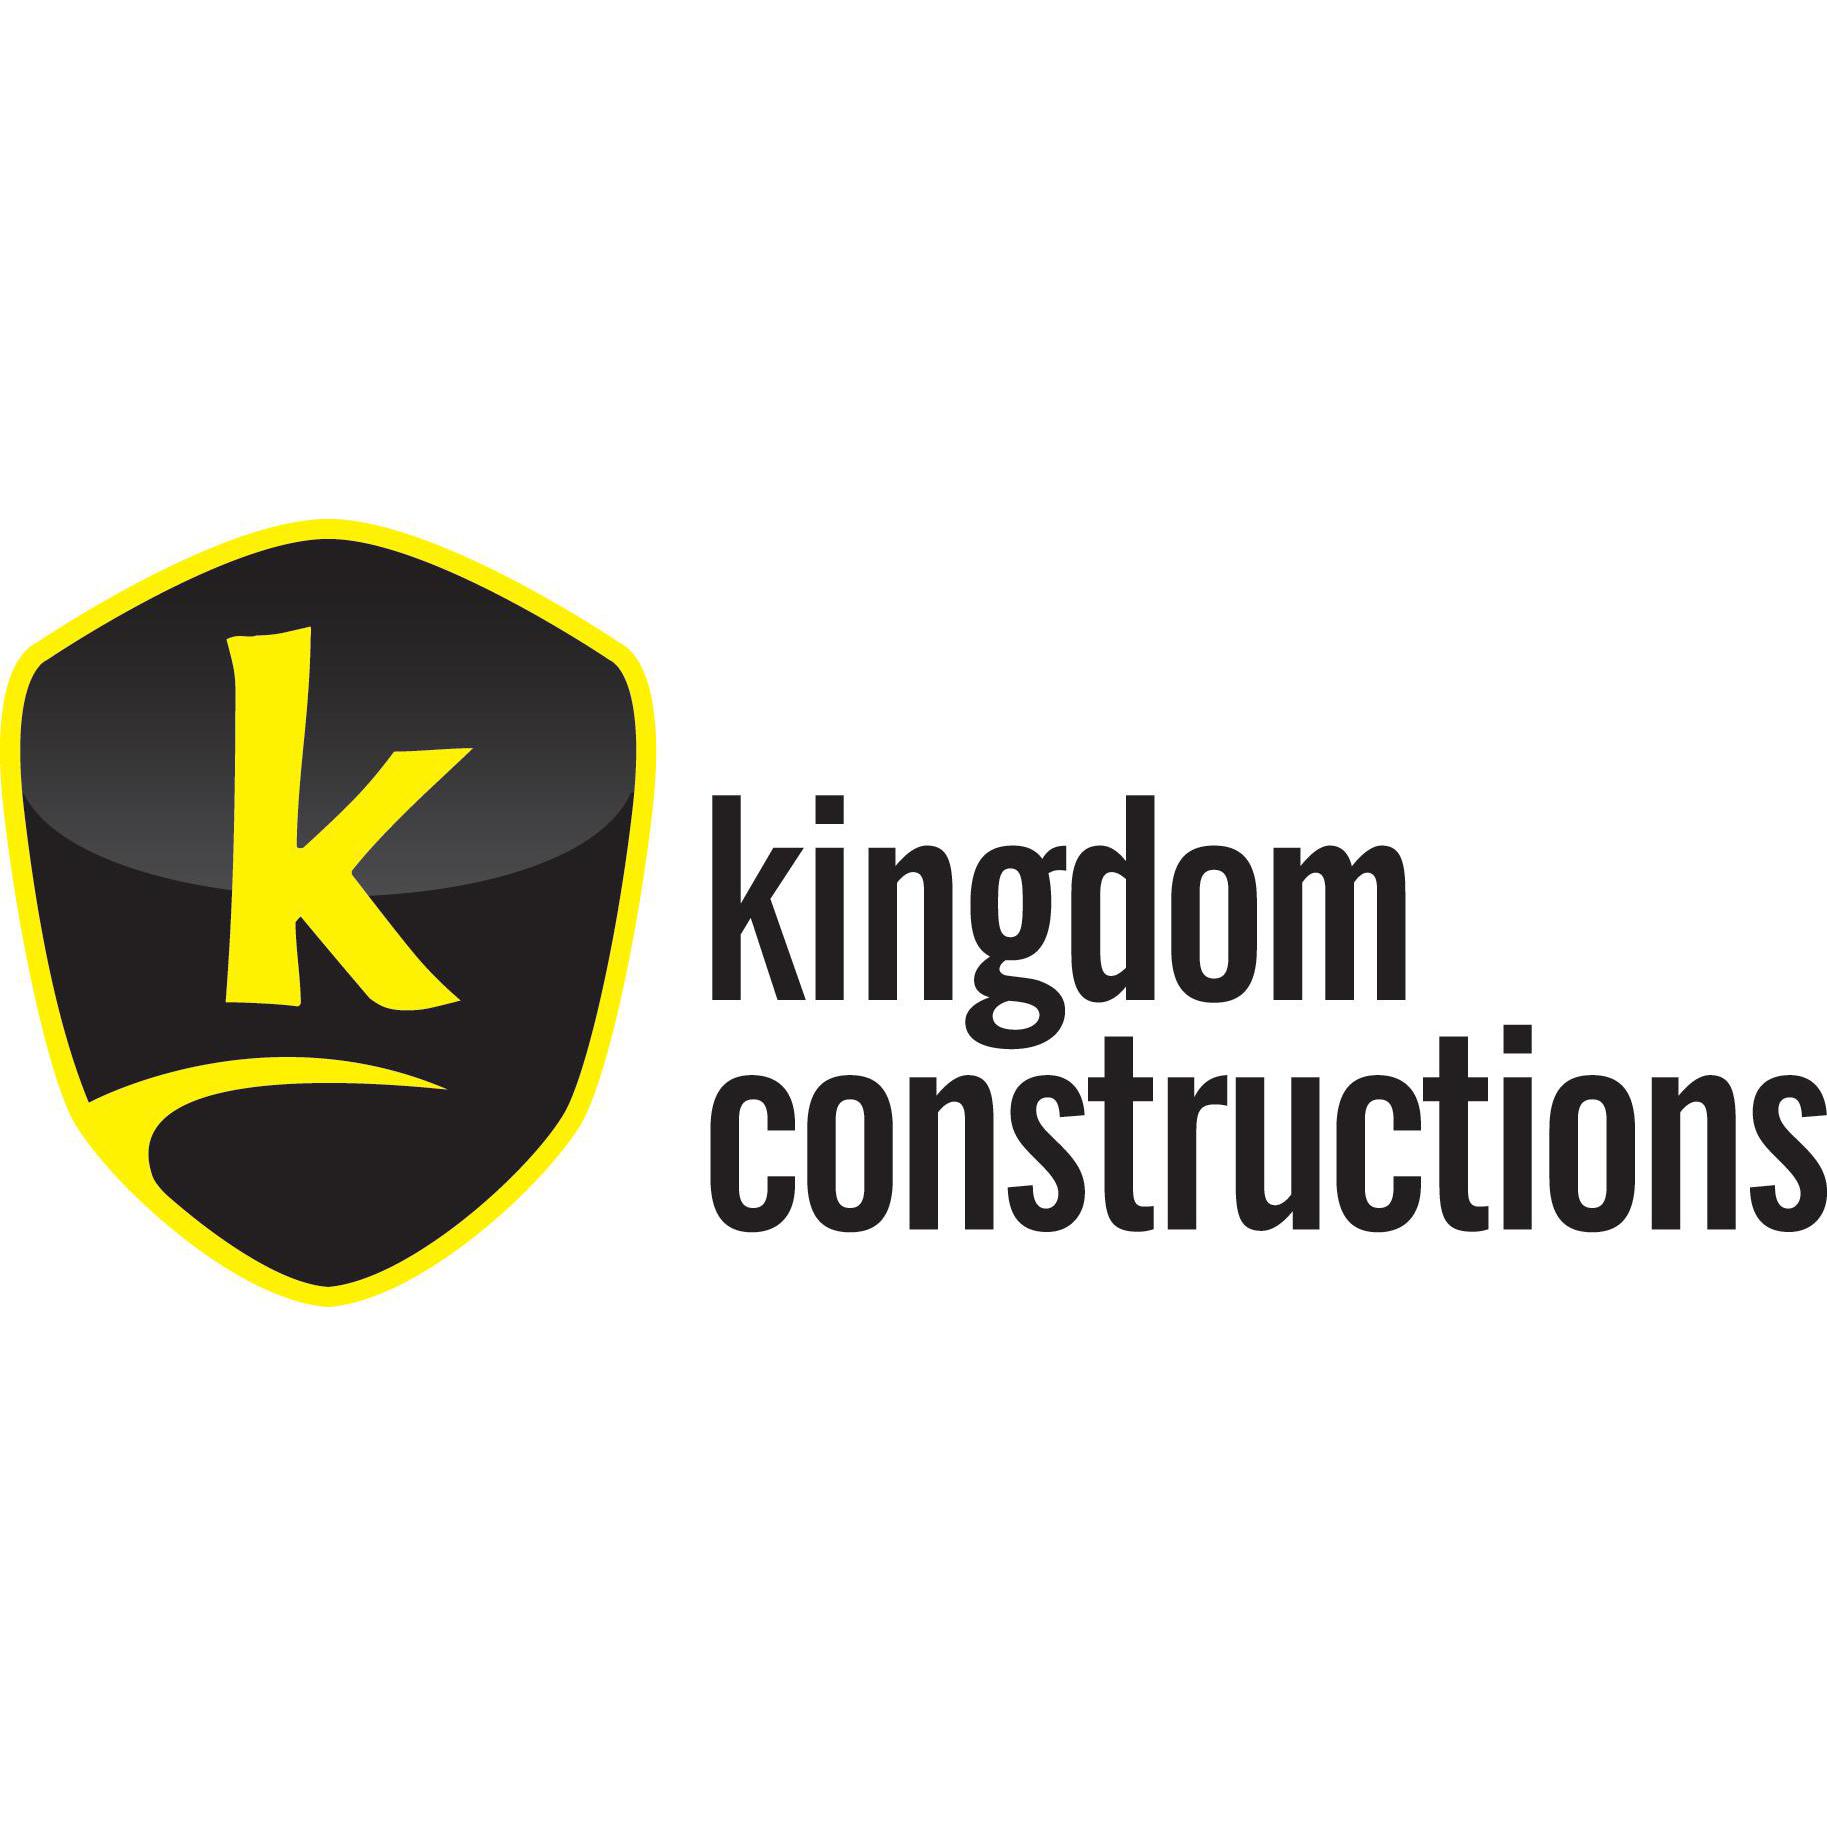 Kingdom Constructions Group Pty Ltd - Thornbury, VIC 3071 - (13) 0038 3857 | ShowMeLocal.com